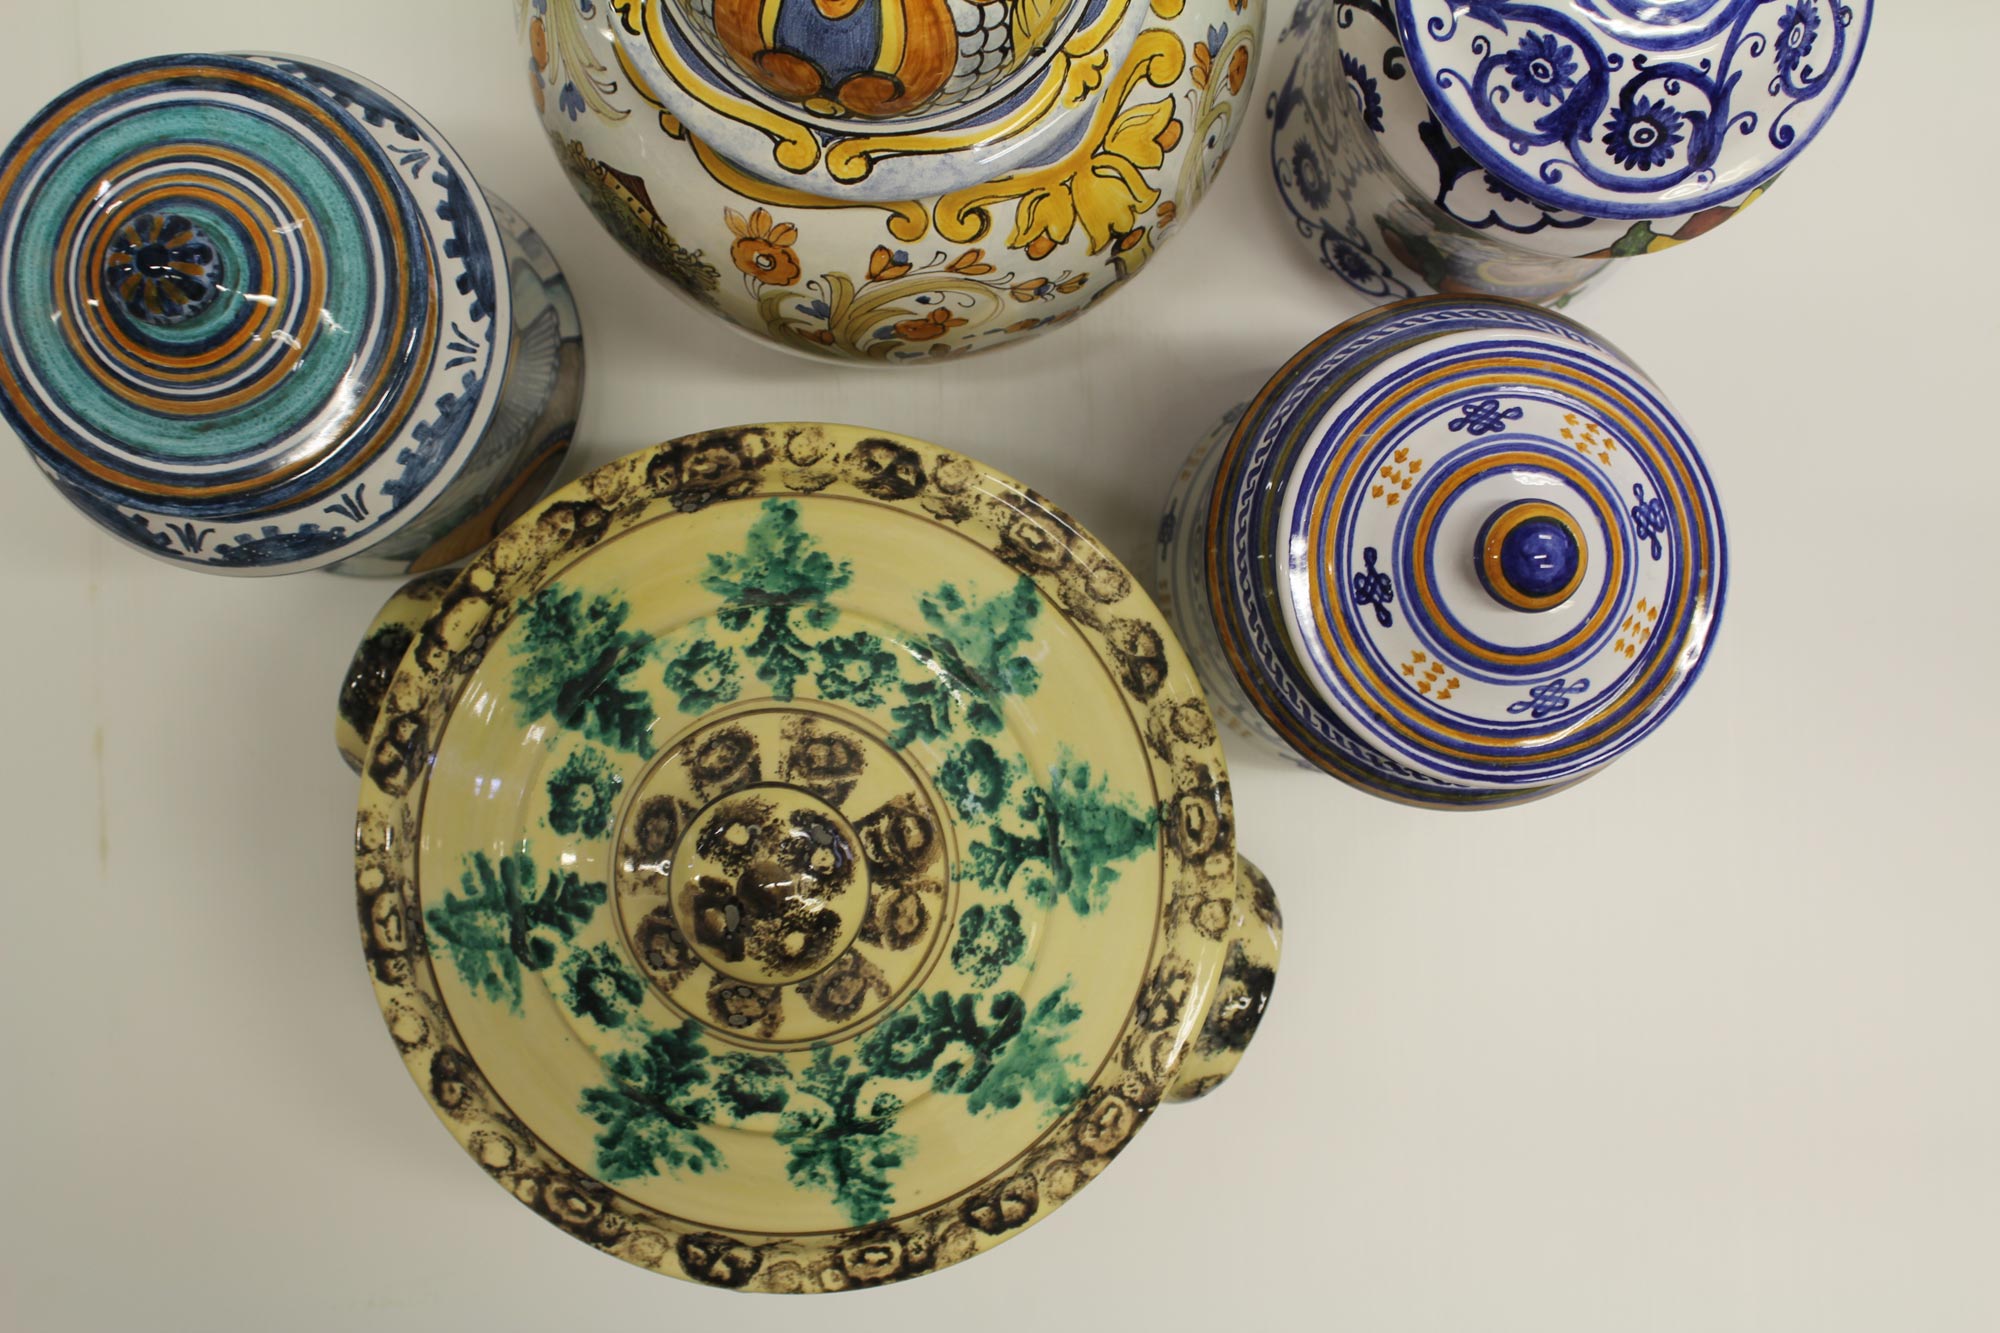 Styles of Albissola ceramics. Photo: Silvia Basso